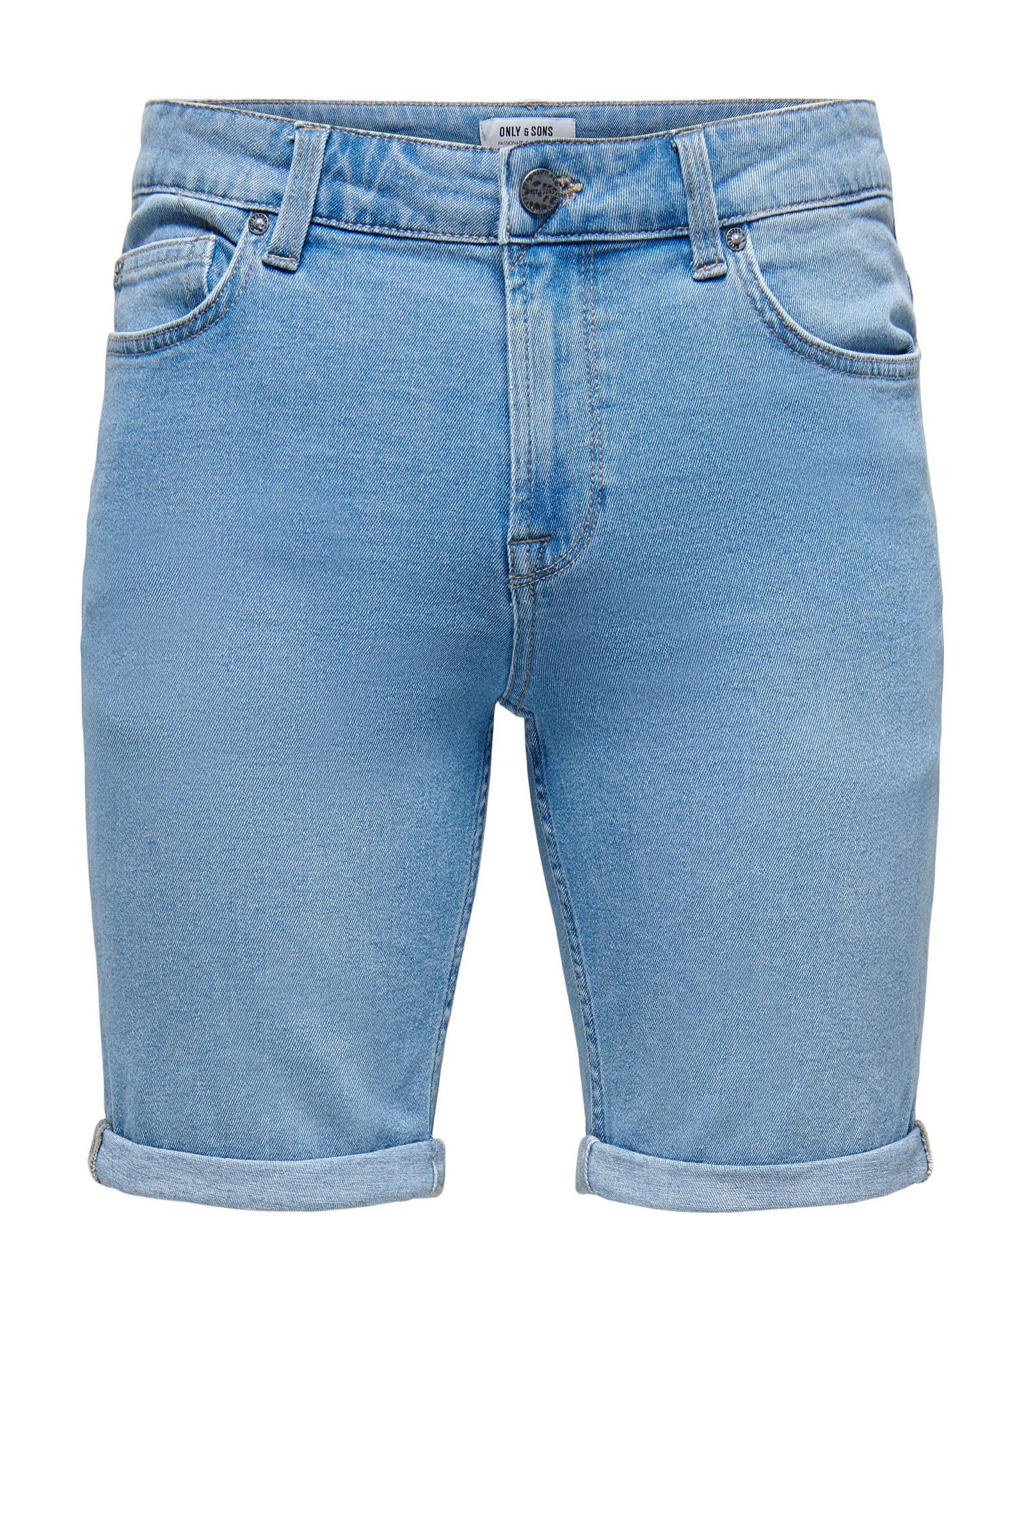 ONLY & SONS regular fit jeans short ONSPLY pk 2335 blue denim